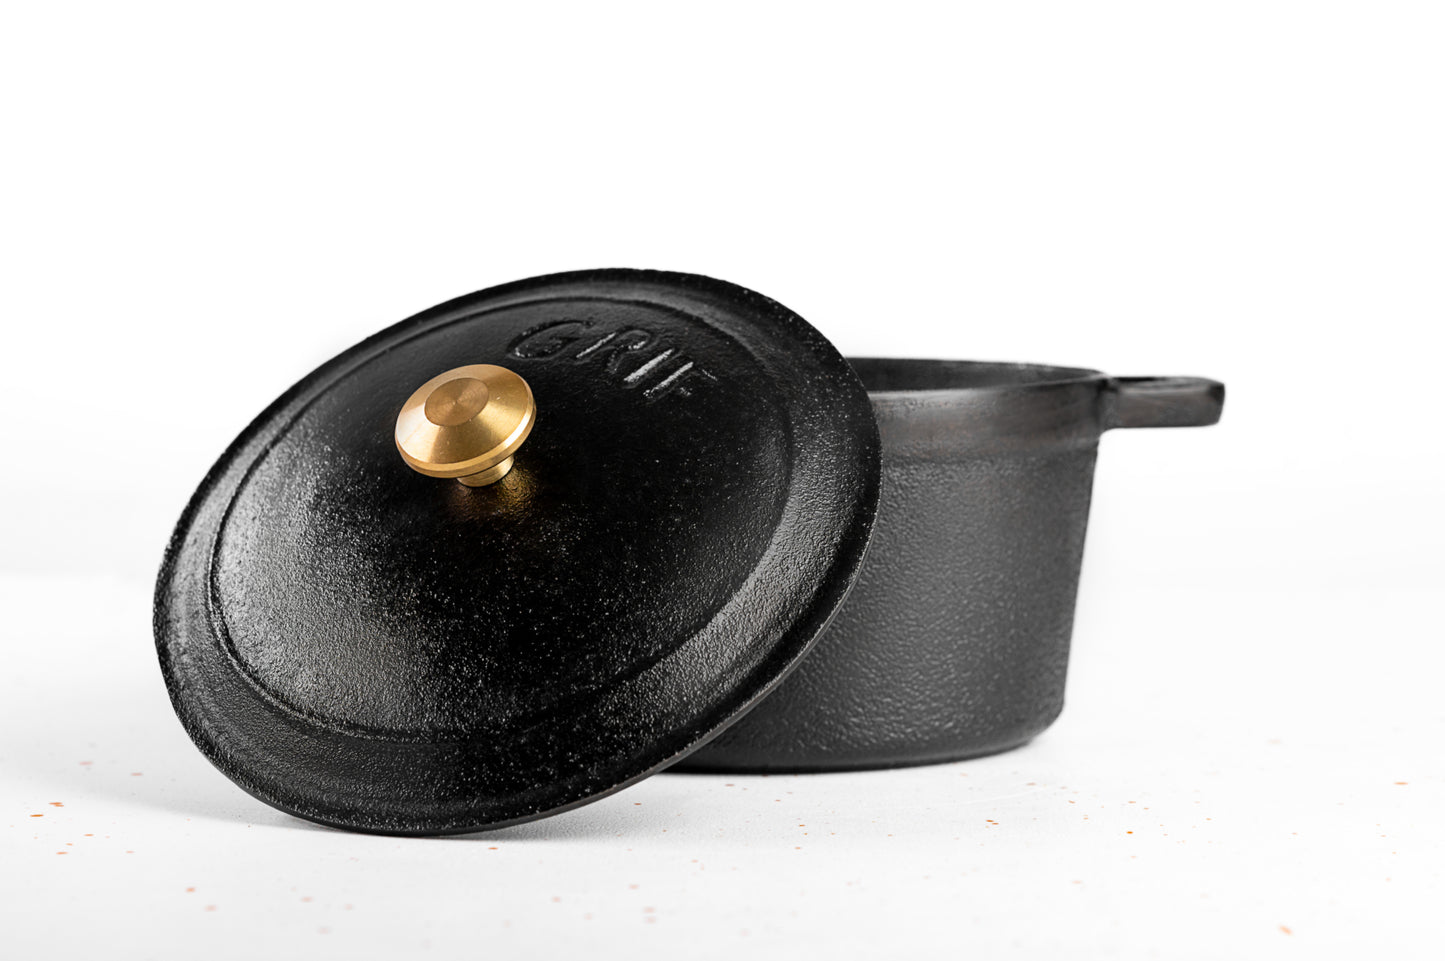 20 CM ROUND DUTCH OVEN – Grif Cookware